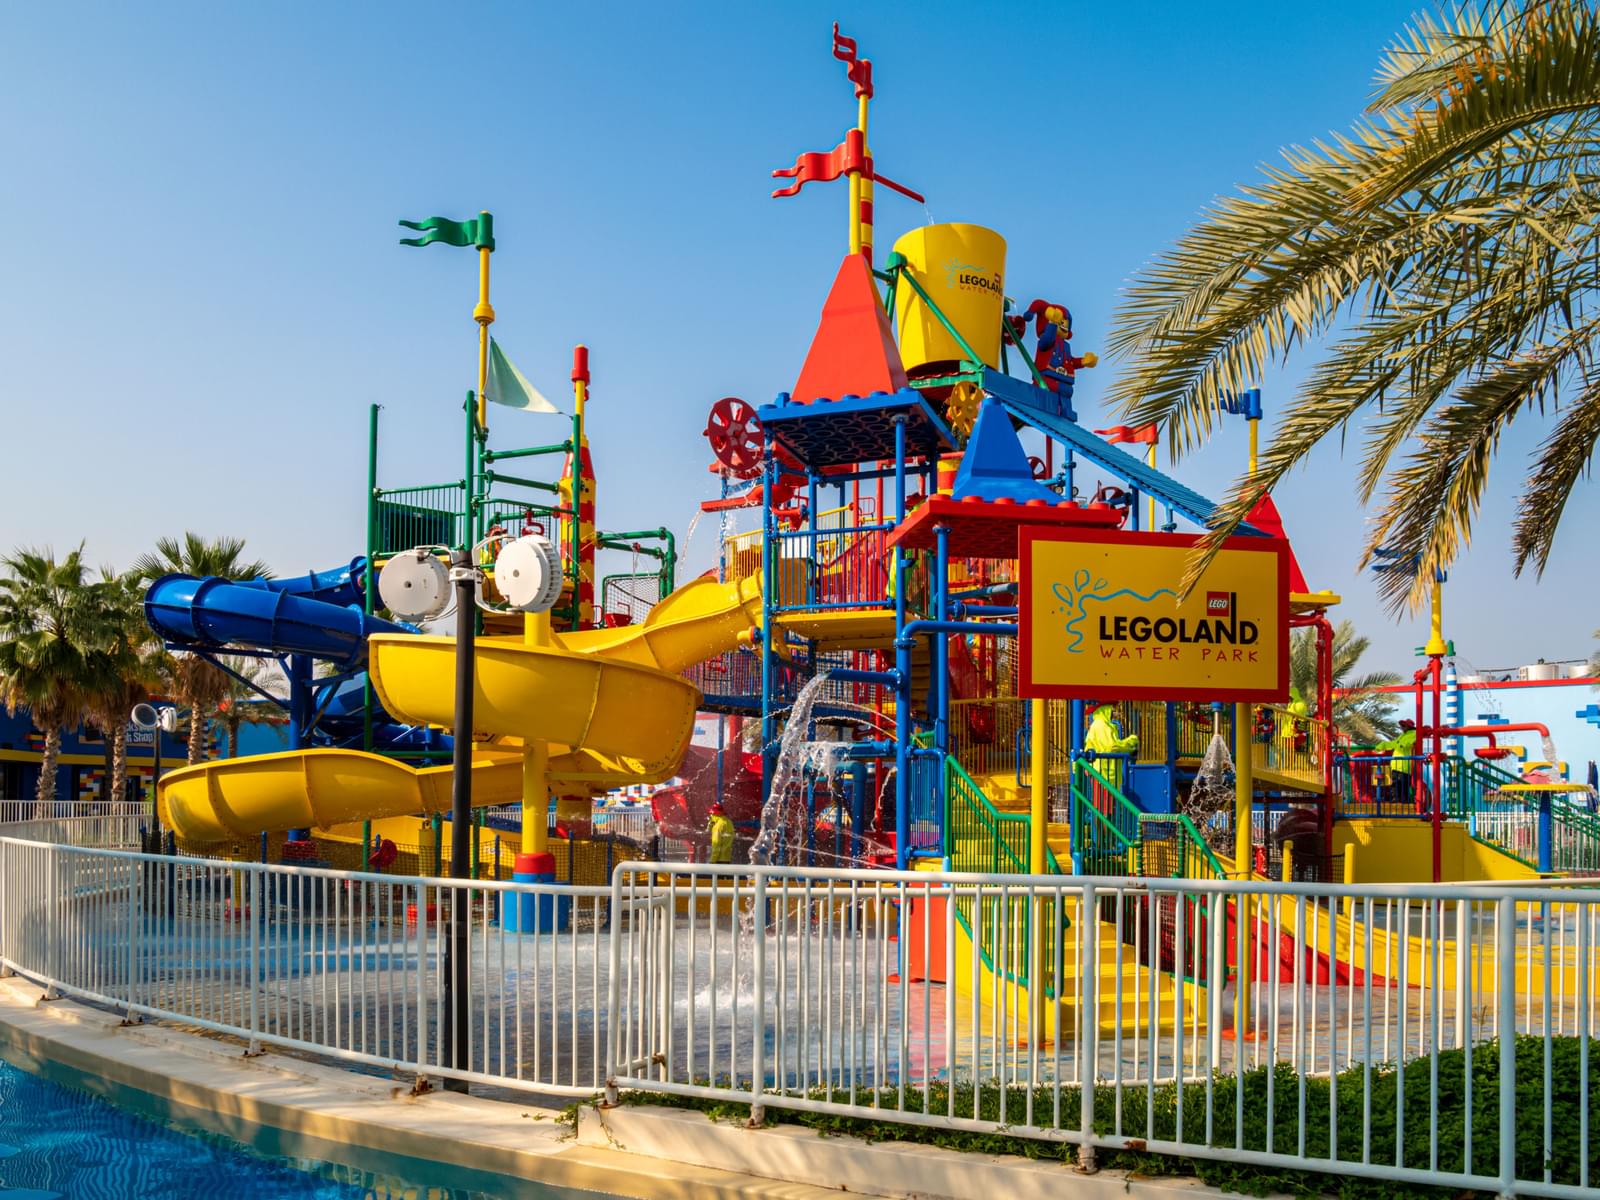 Have fun at the Legoland Theme Park